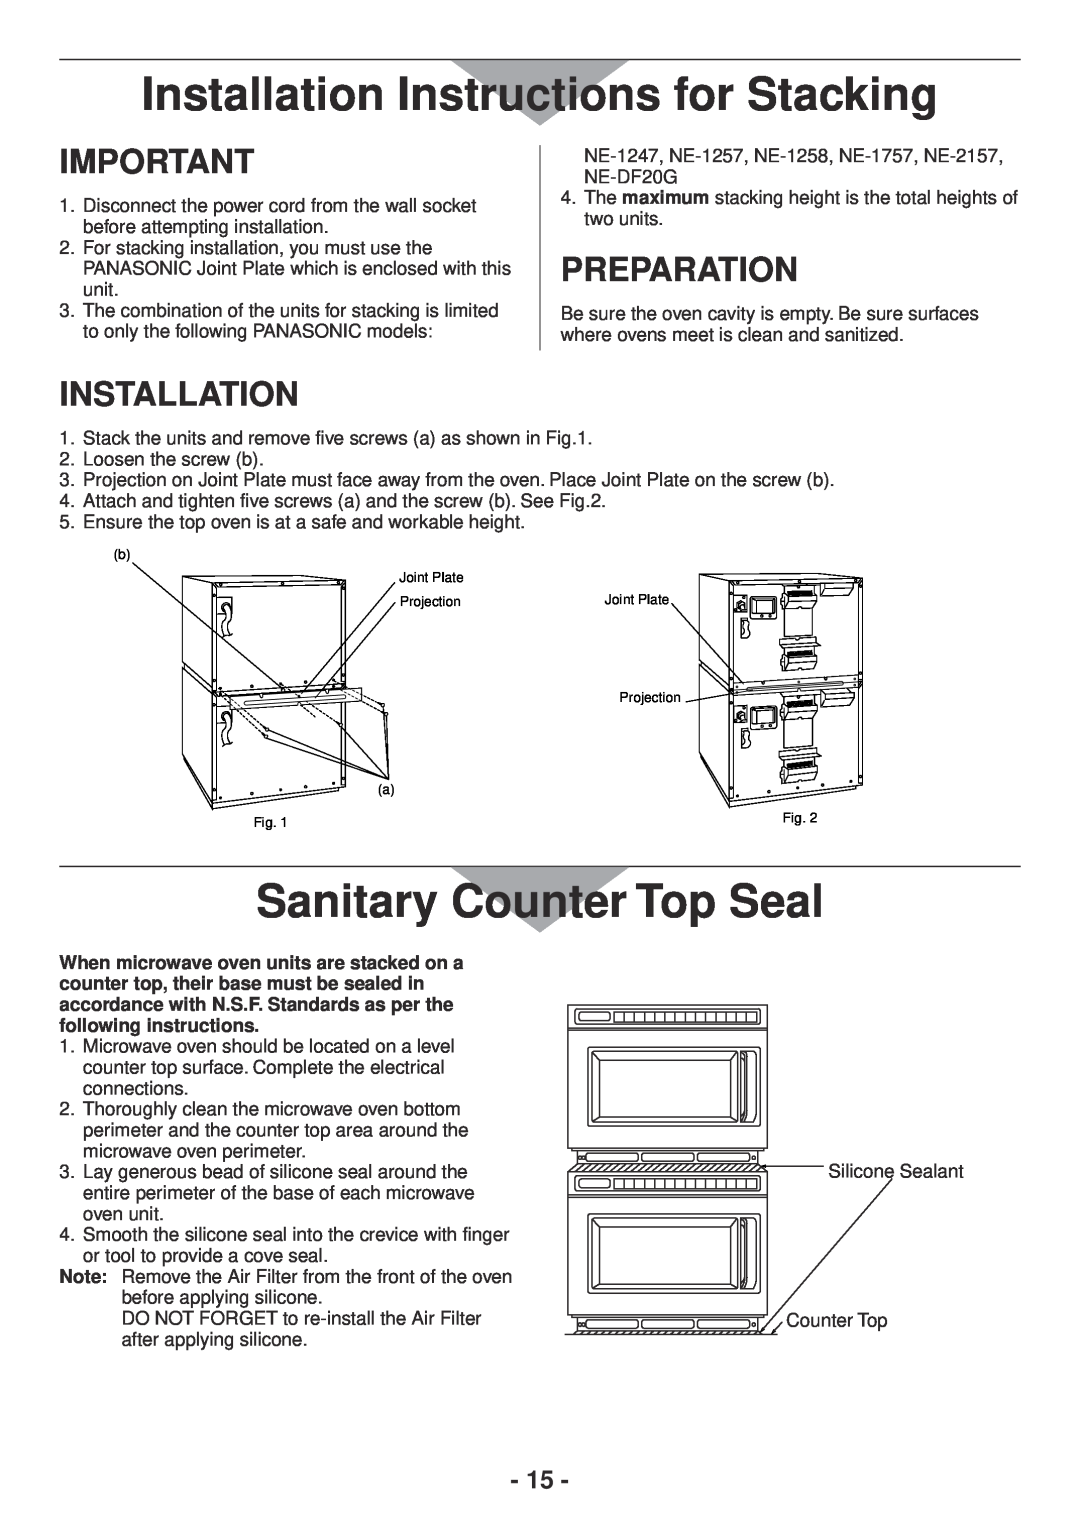 Panasonic NE1257R, NE2157R Installation Instructions for Stacking, Sanitary Counter Top Seal, preparation, installation 